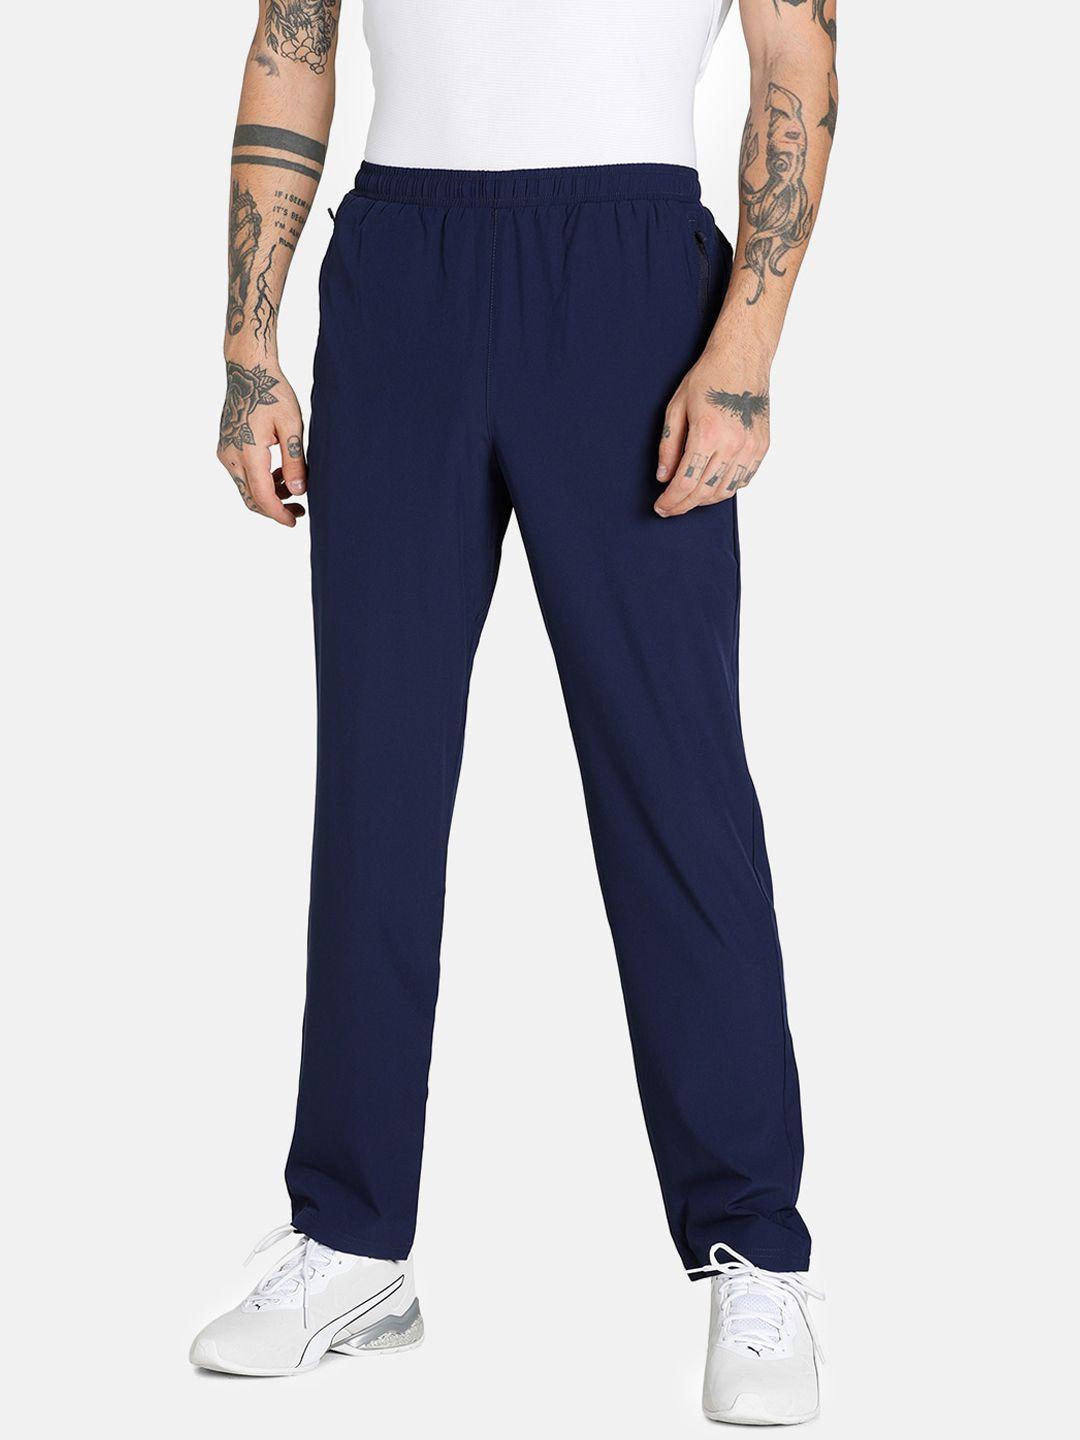 puma men navy blue woven training pants slip on solid sports pants